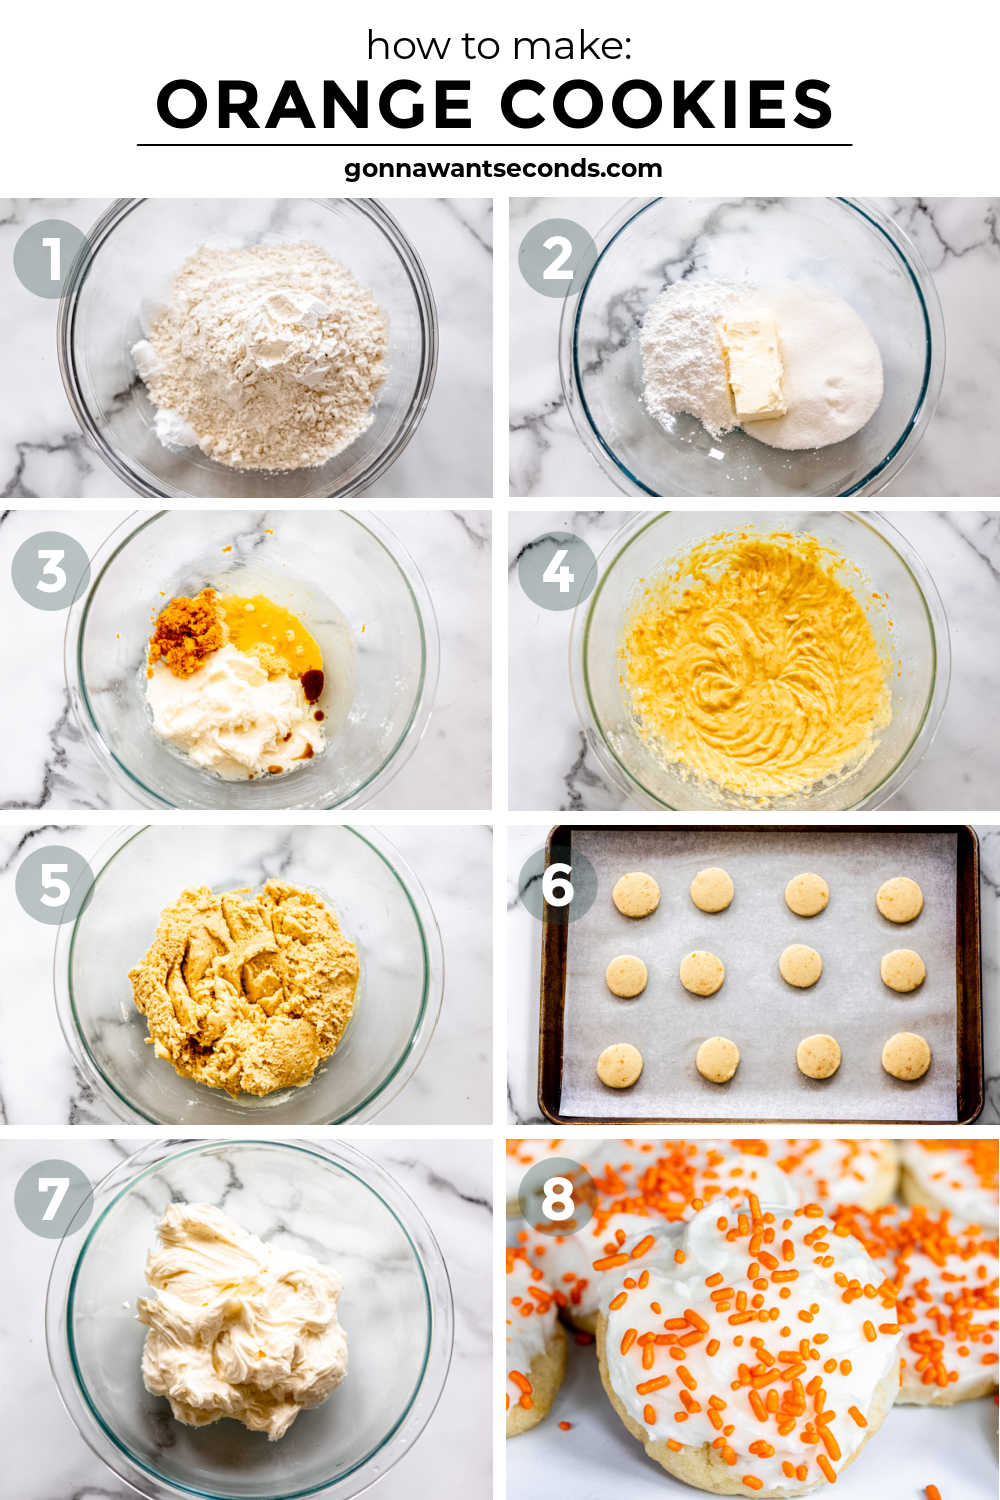 Step by step how to make orange cookies